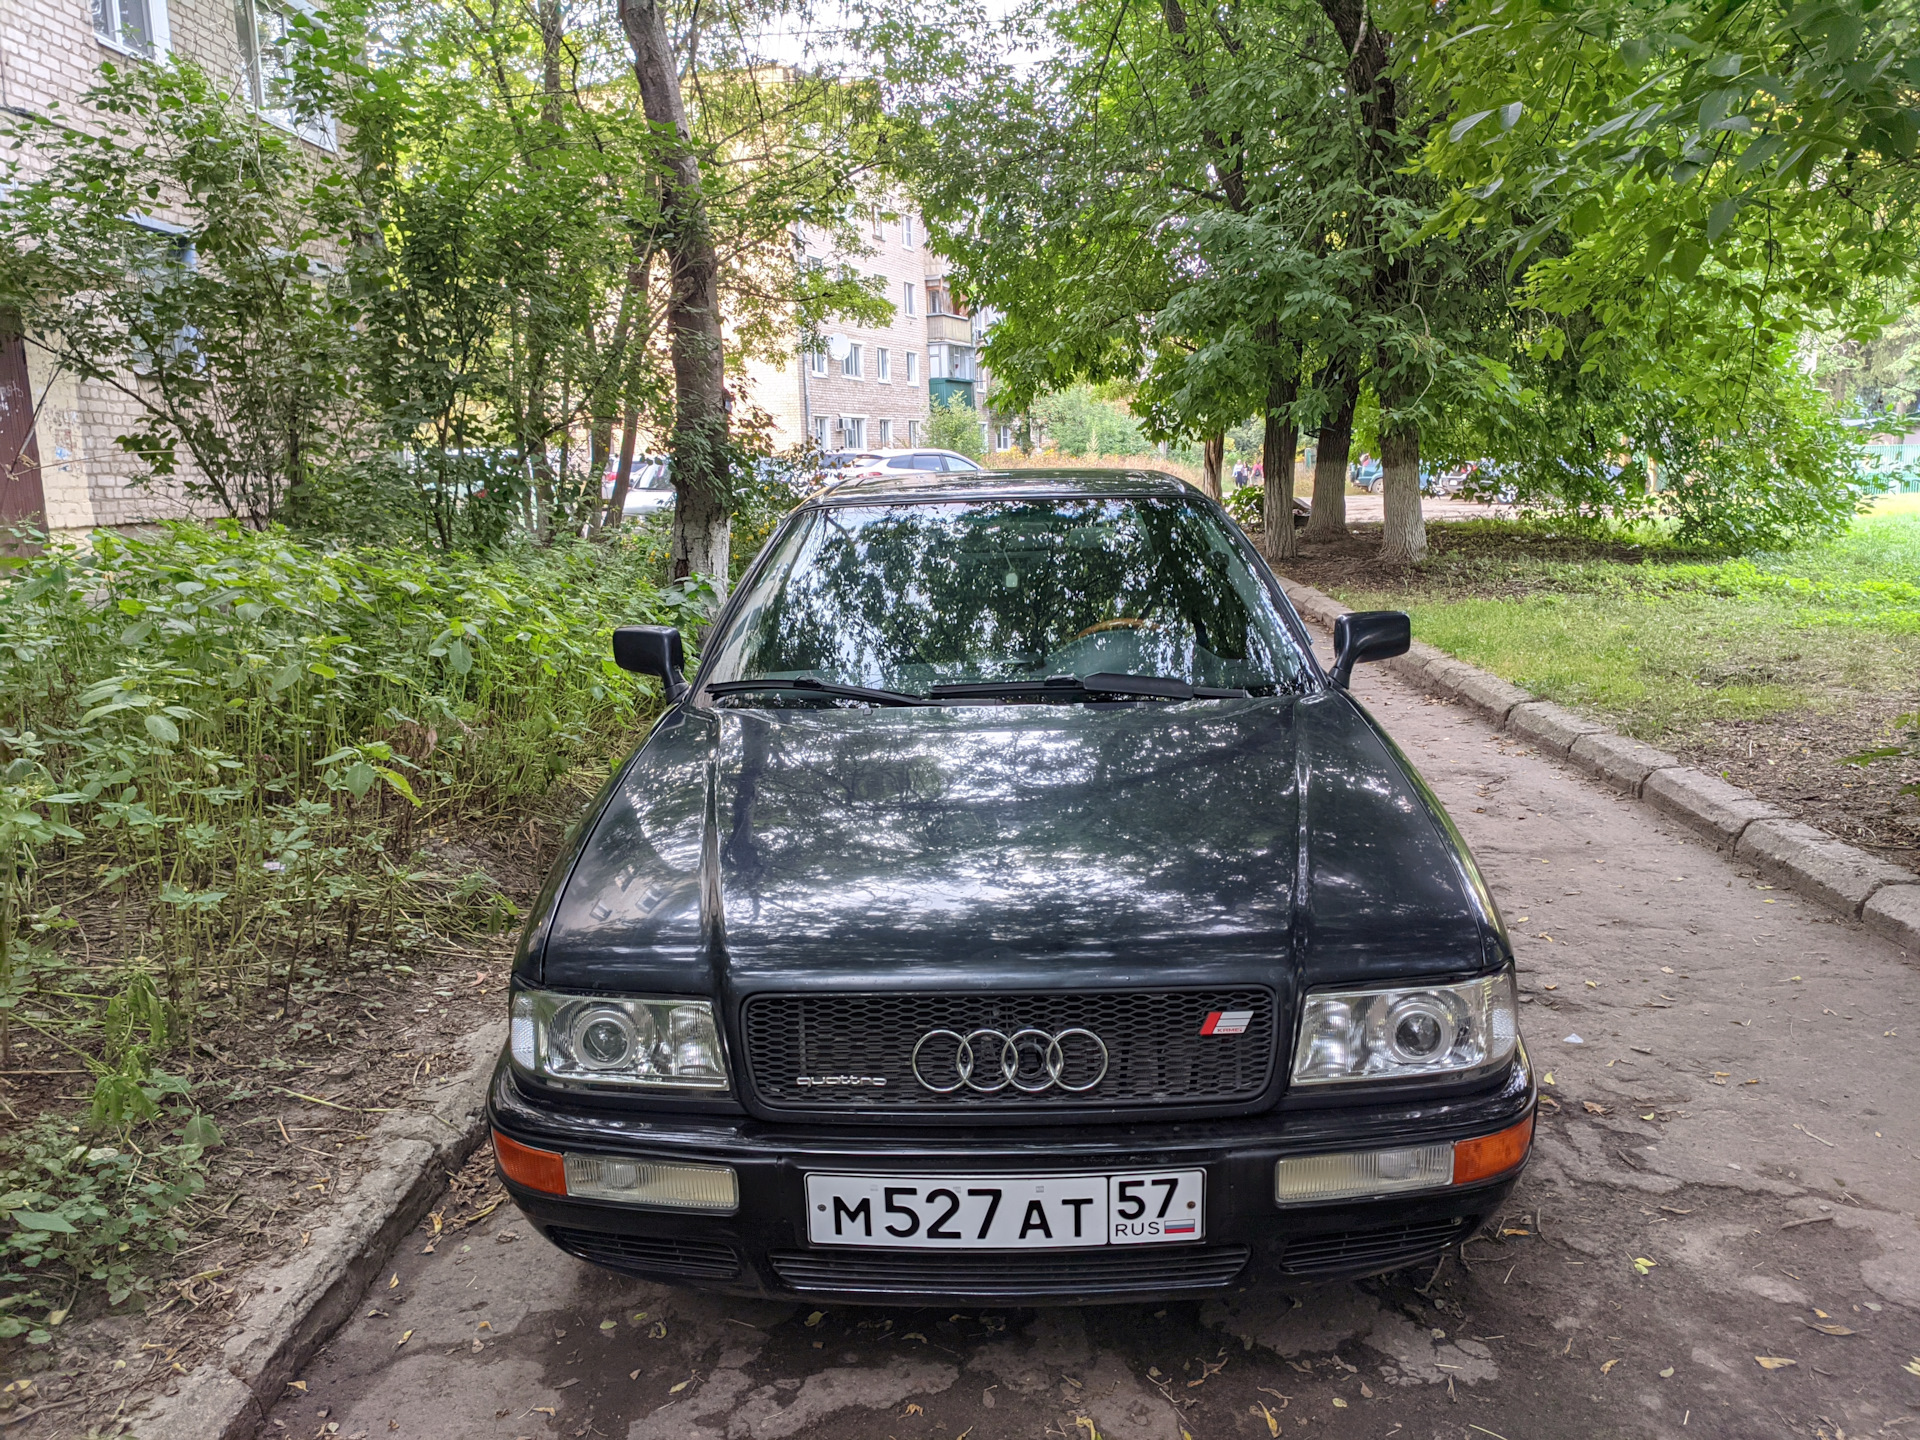 Моноблоки ауди. Audi v8 1990. Audi v8 1988. "Audi" "v8" "1988" WD. Ауди v8 1988.